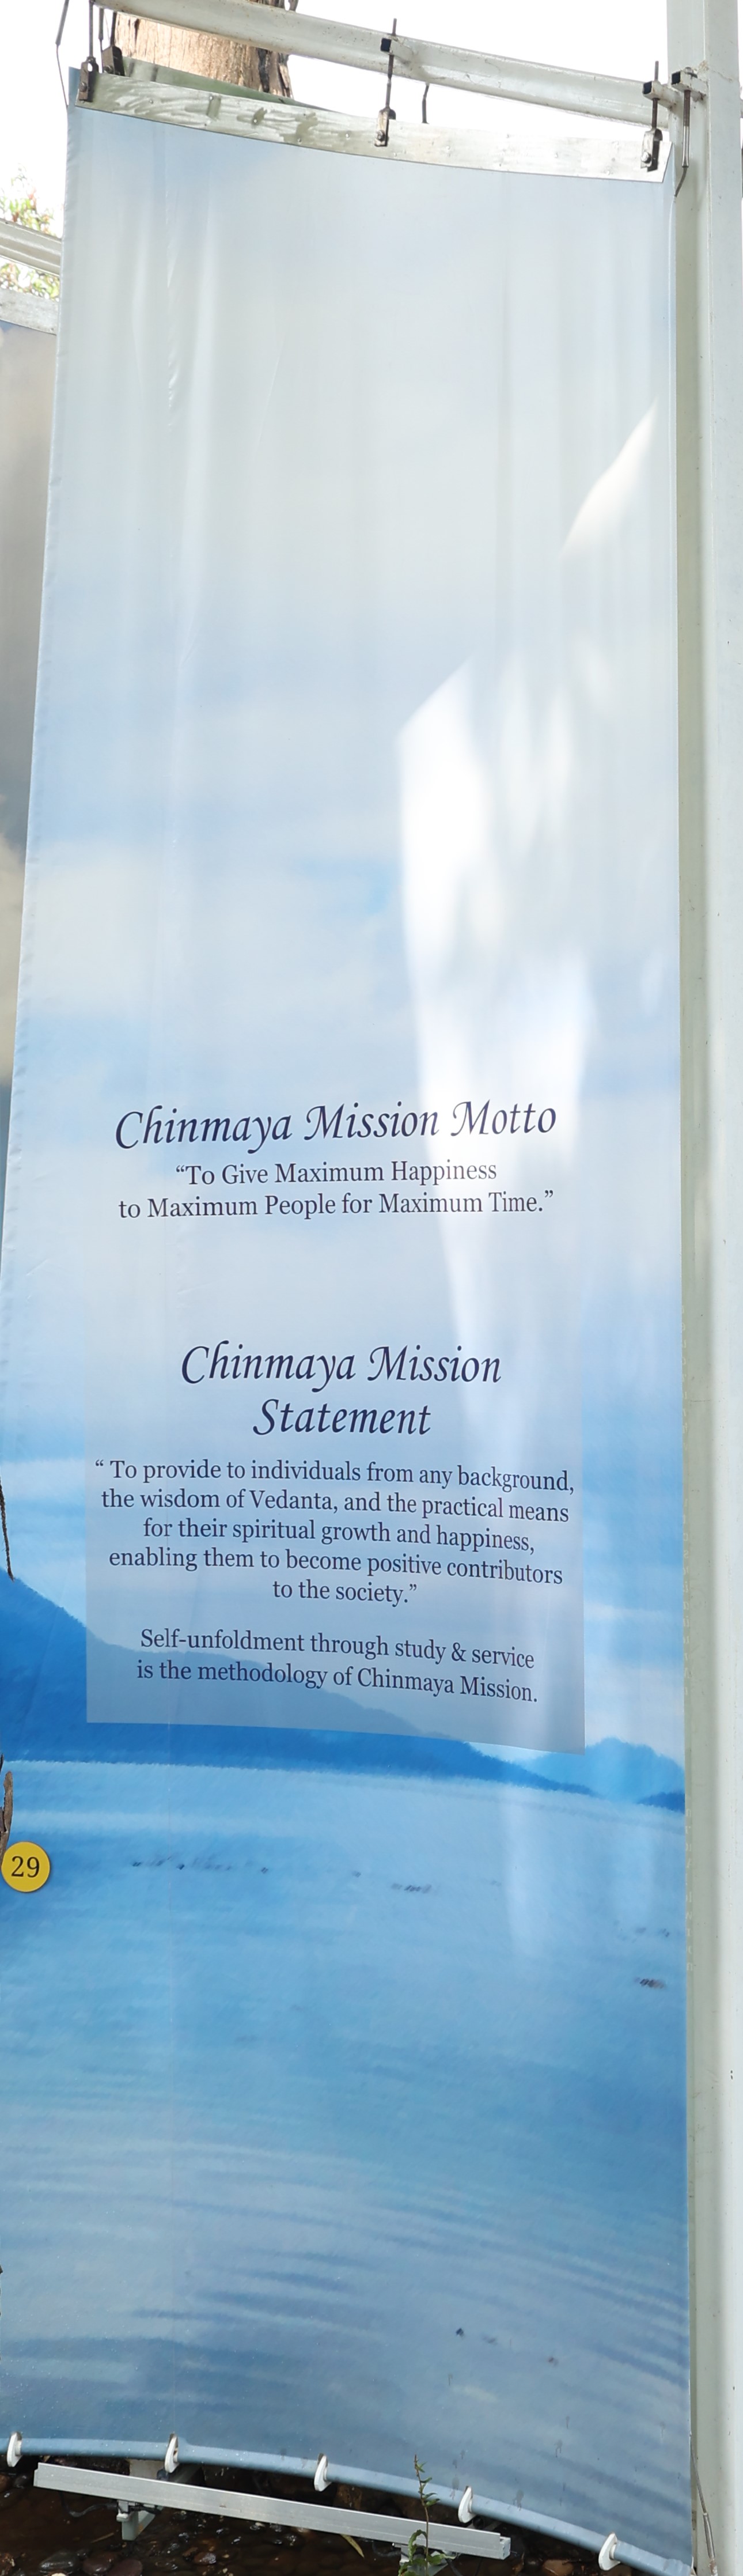 Chinmaya Mission Motto & Statement